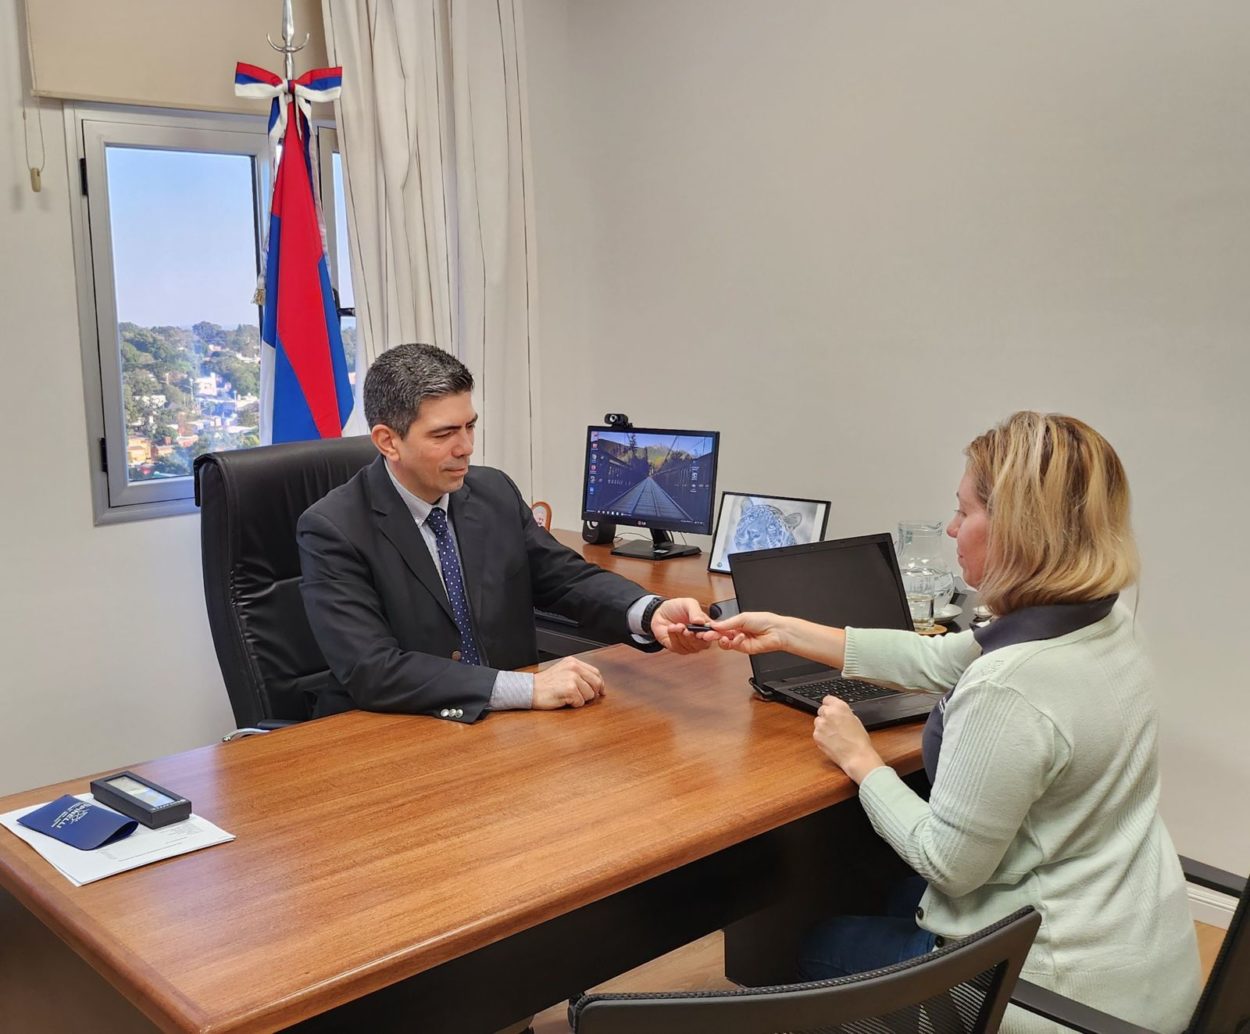 El flamante ministro del STJ Juan Manuel Díaz registró su firma digital imagen-1